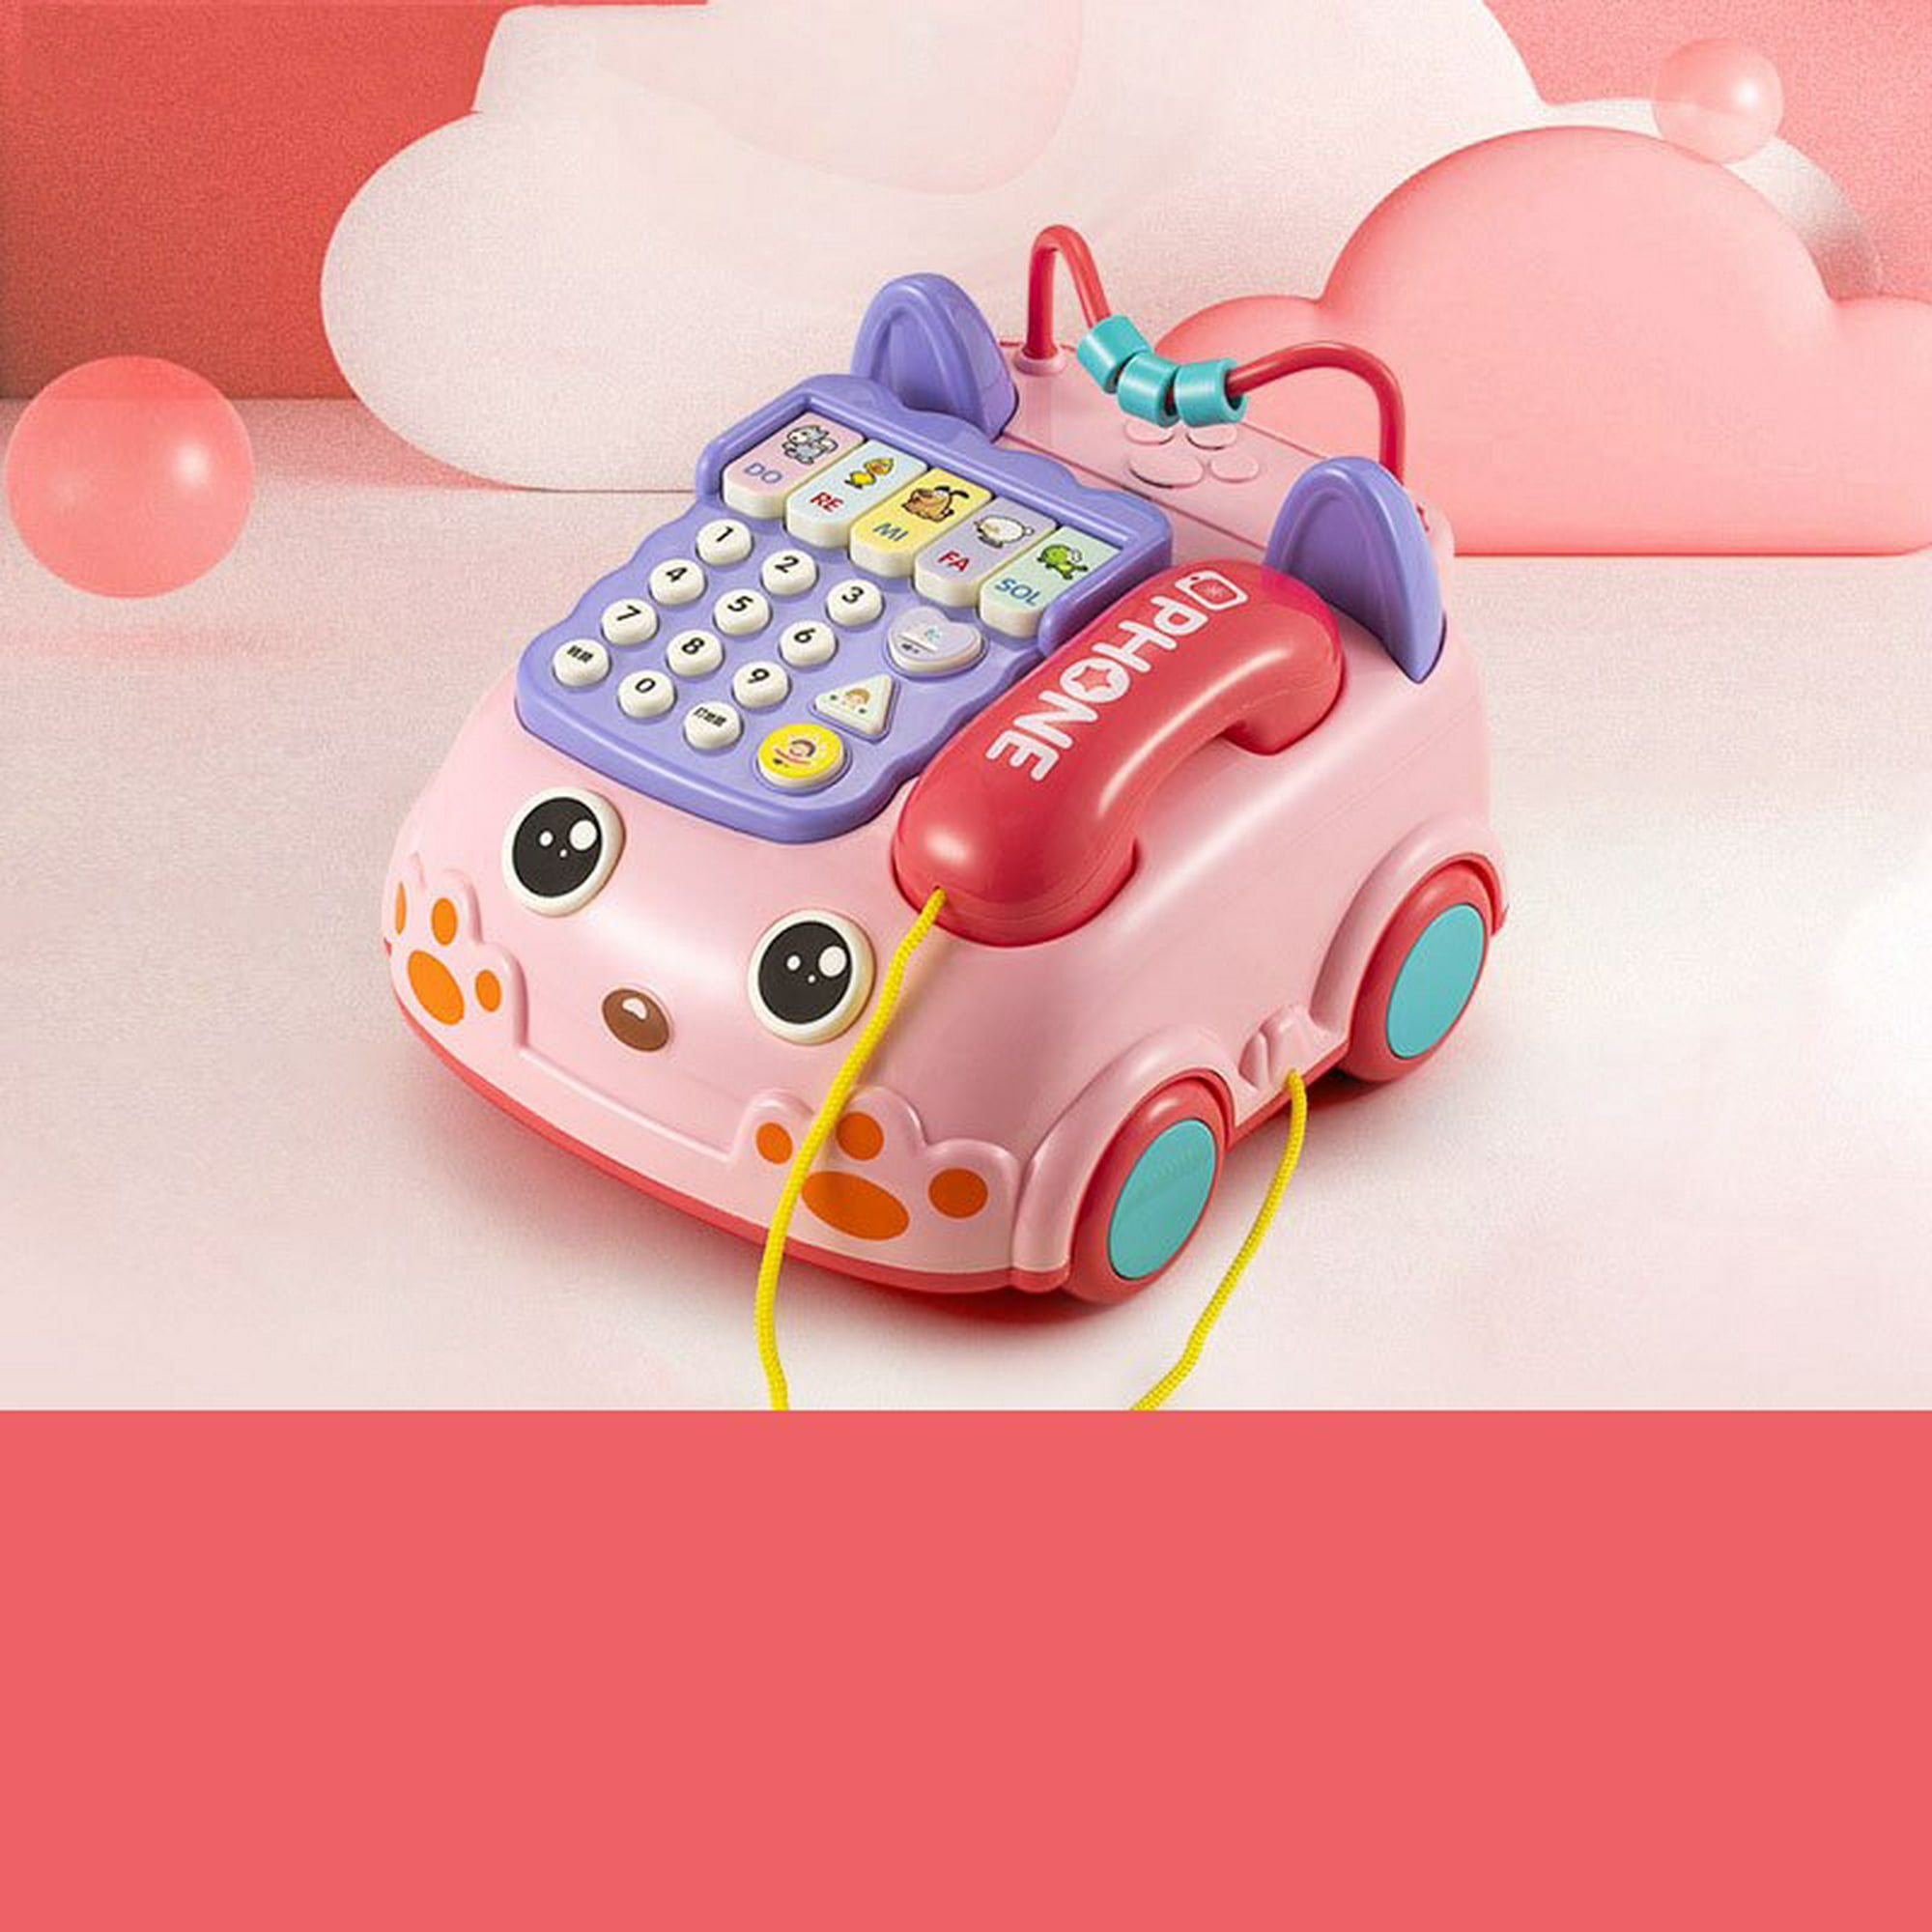 Juguetes de teléfono móvil Montessori para niños, juguetes de piano musical  para niña, juguetes de teléfono móvil para niños de 2 a 4 años, de 0 a 12  mesesET0536-Rosa zhangmengya unisex